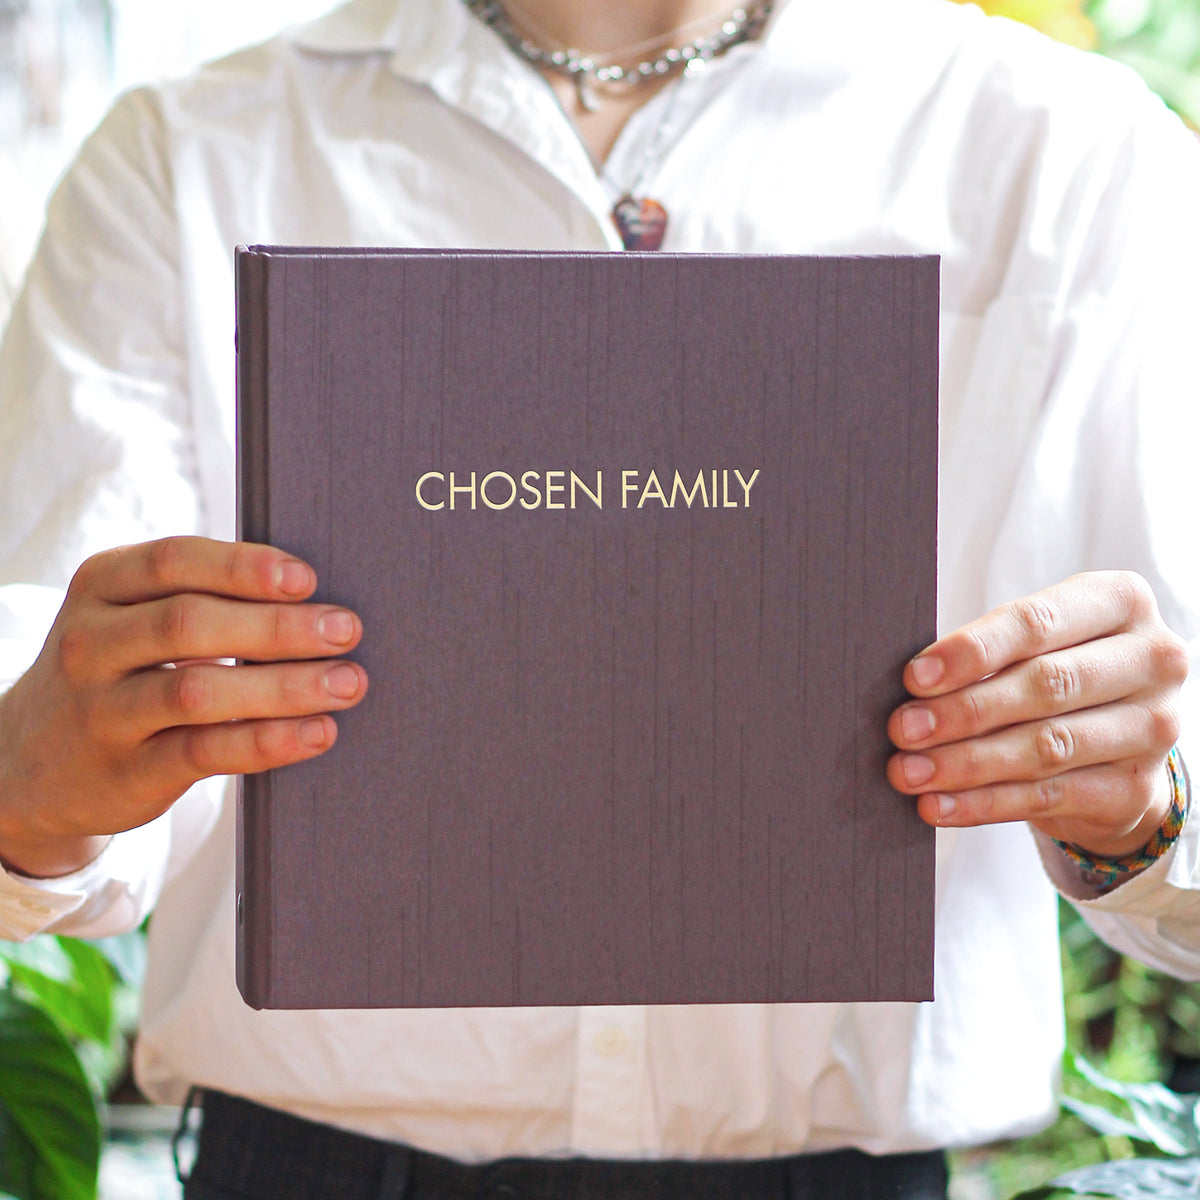 Chosen Family Album | Medium Photo Binder for 4 x 6 photos | with Amethyst Silk Cover